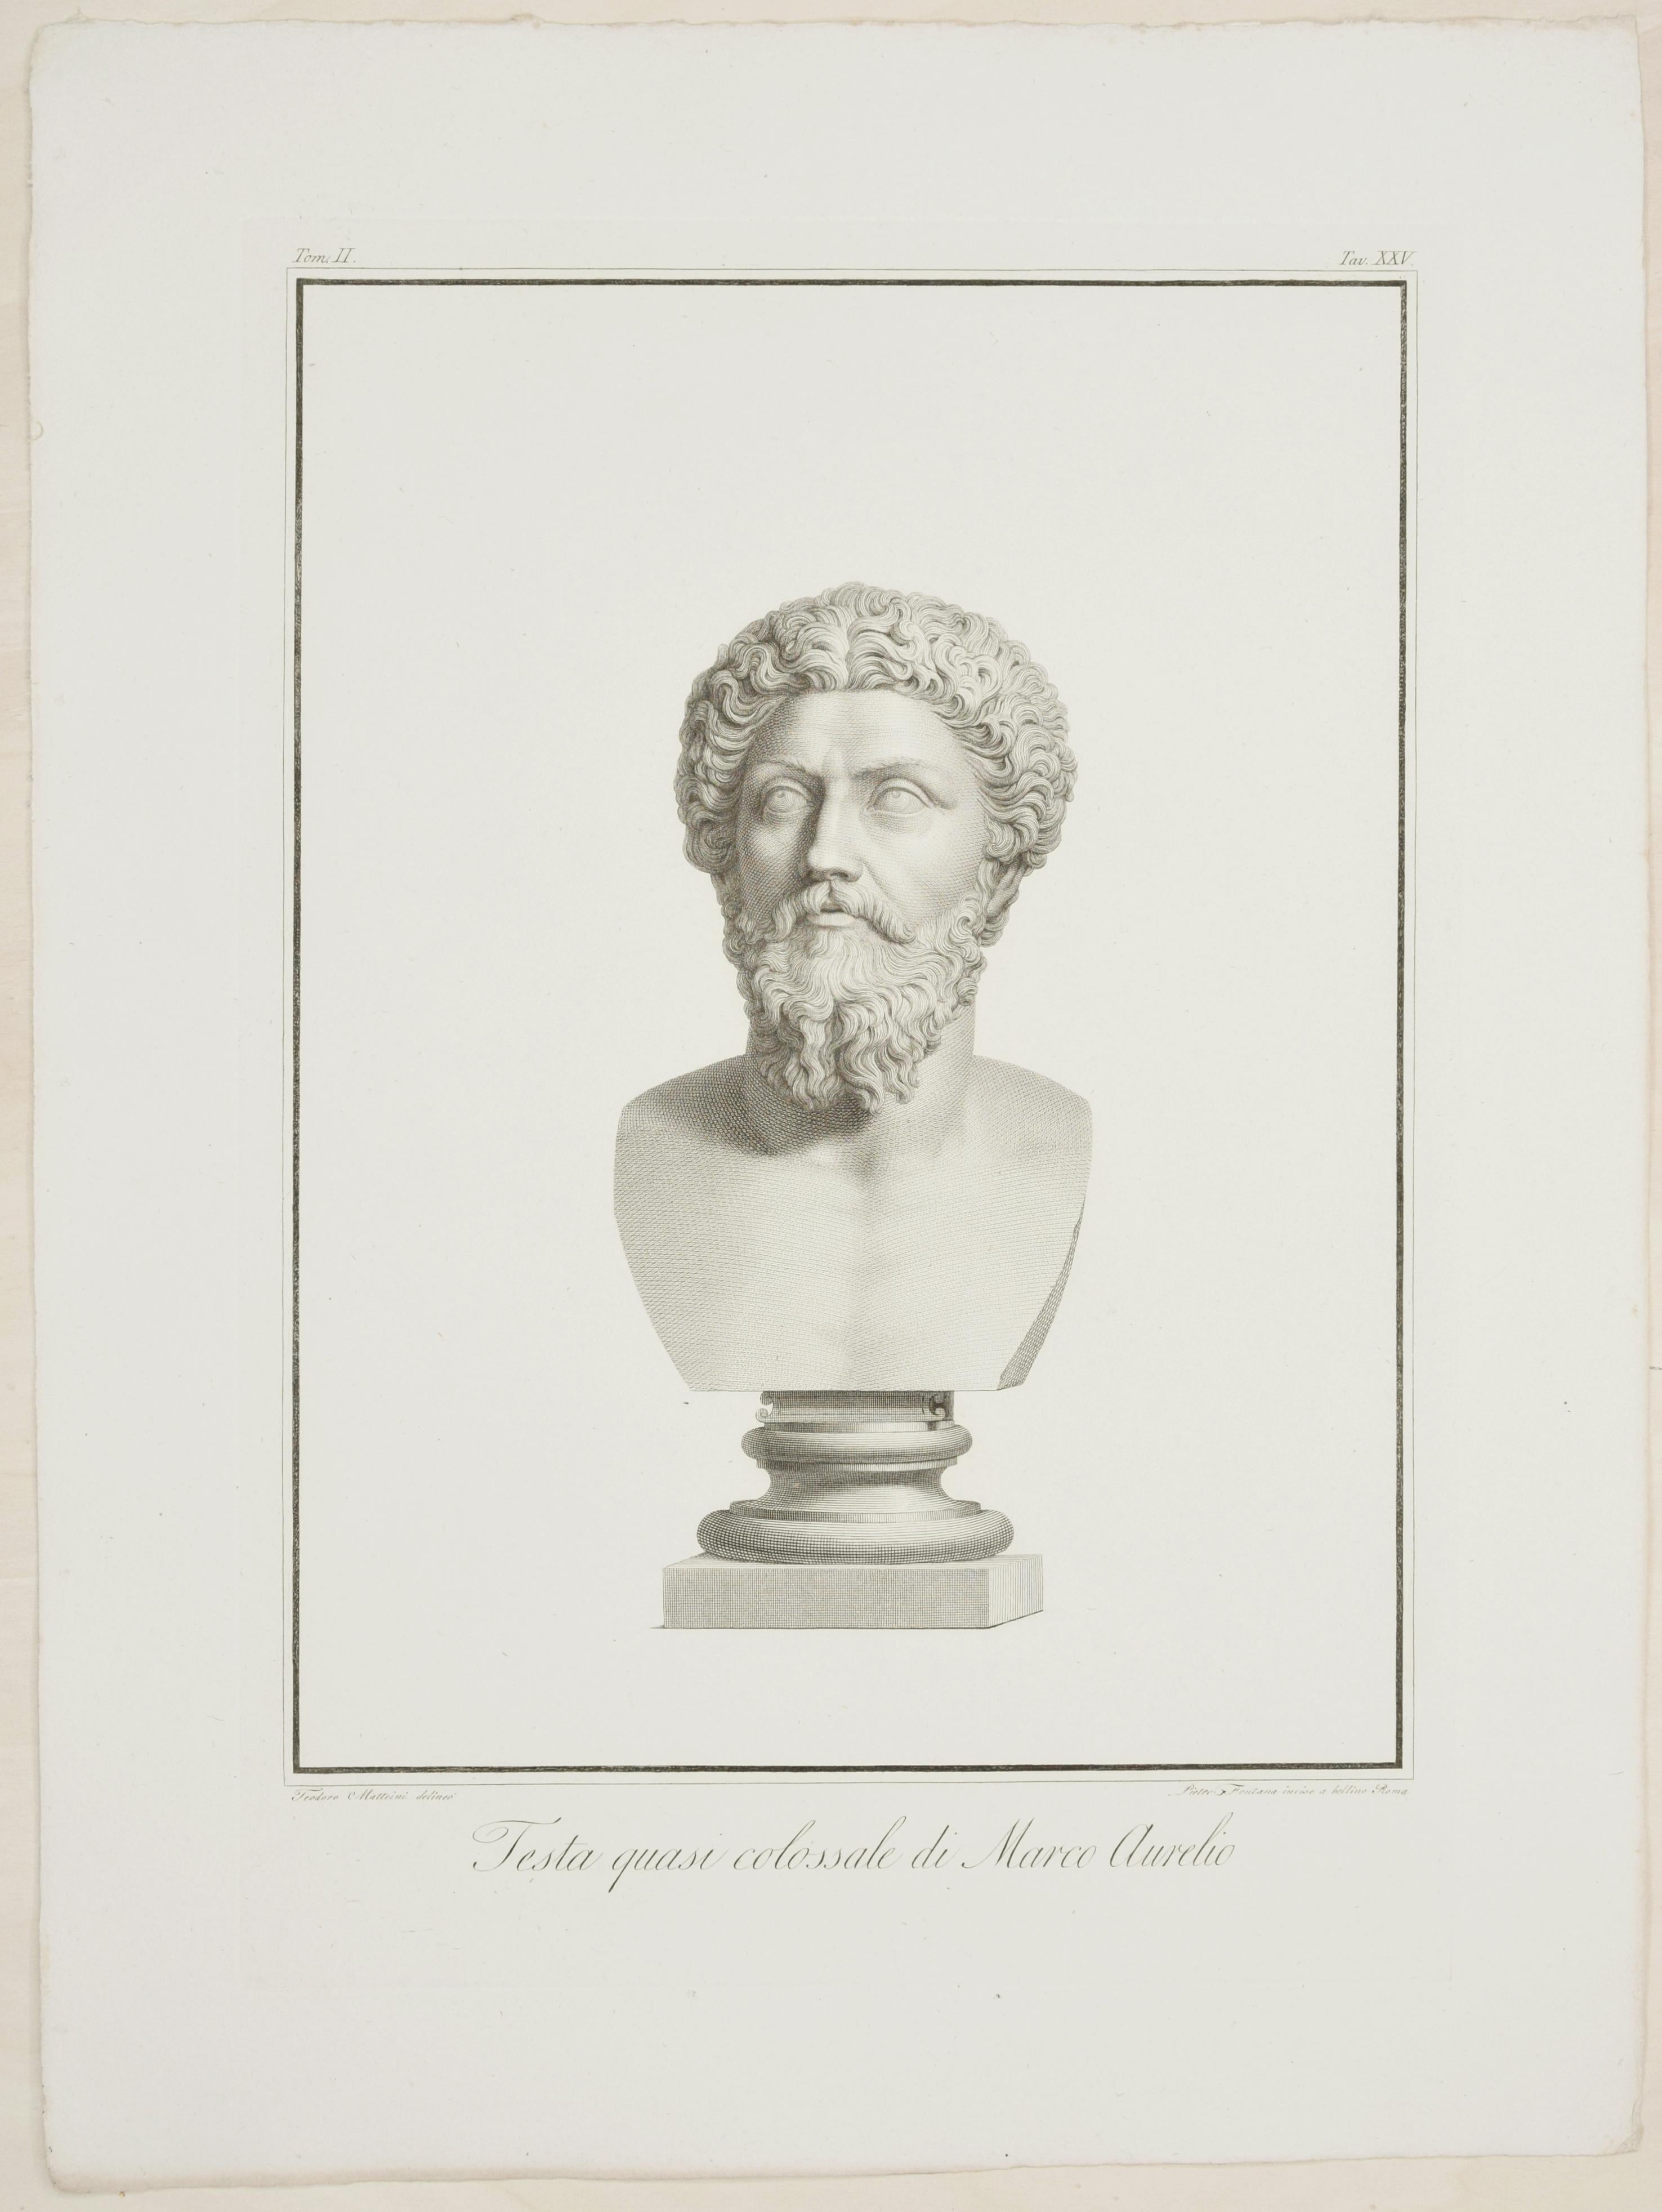 Francesco Cecchini Figurative Print - Testa Quasi Colossale di Marco Aurelio - Etching by P. Fontana